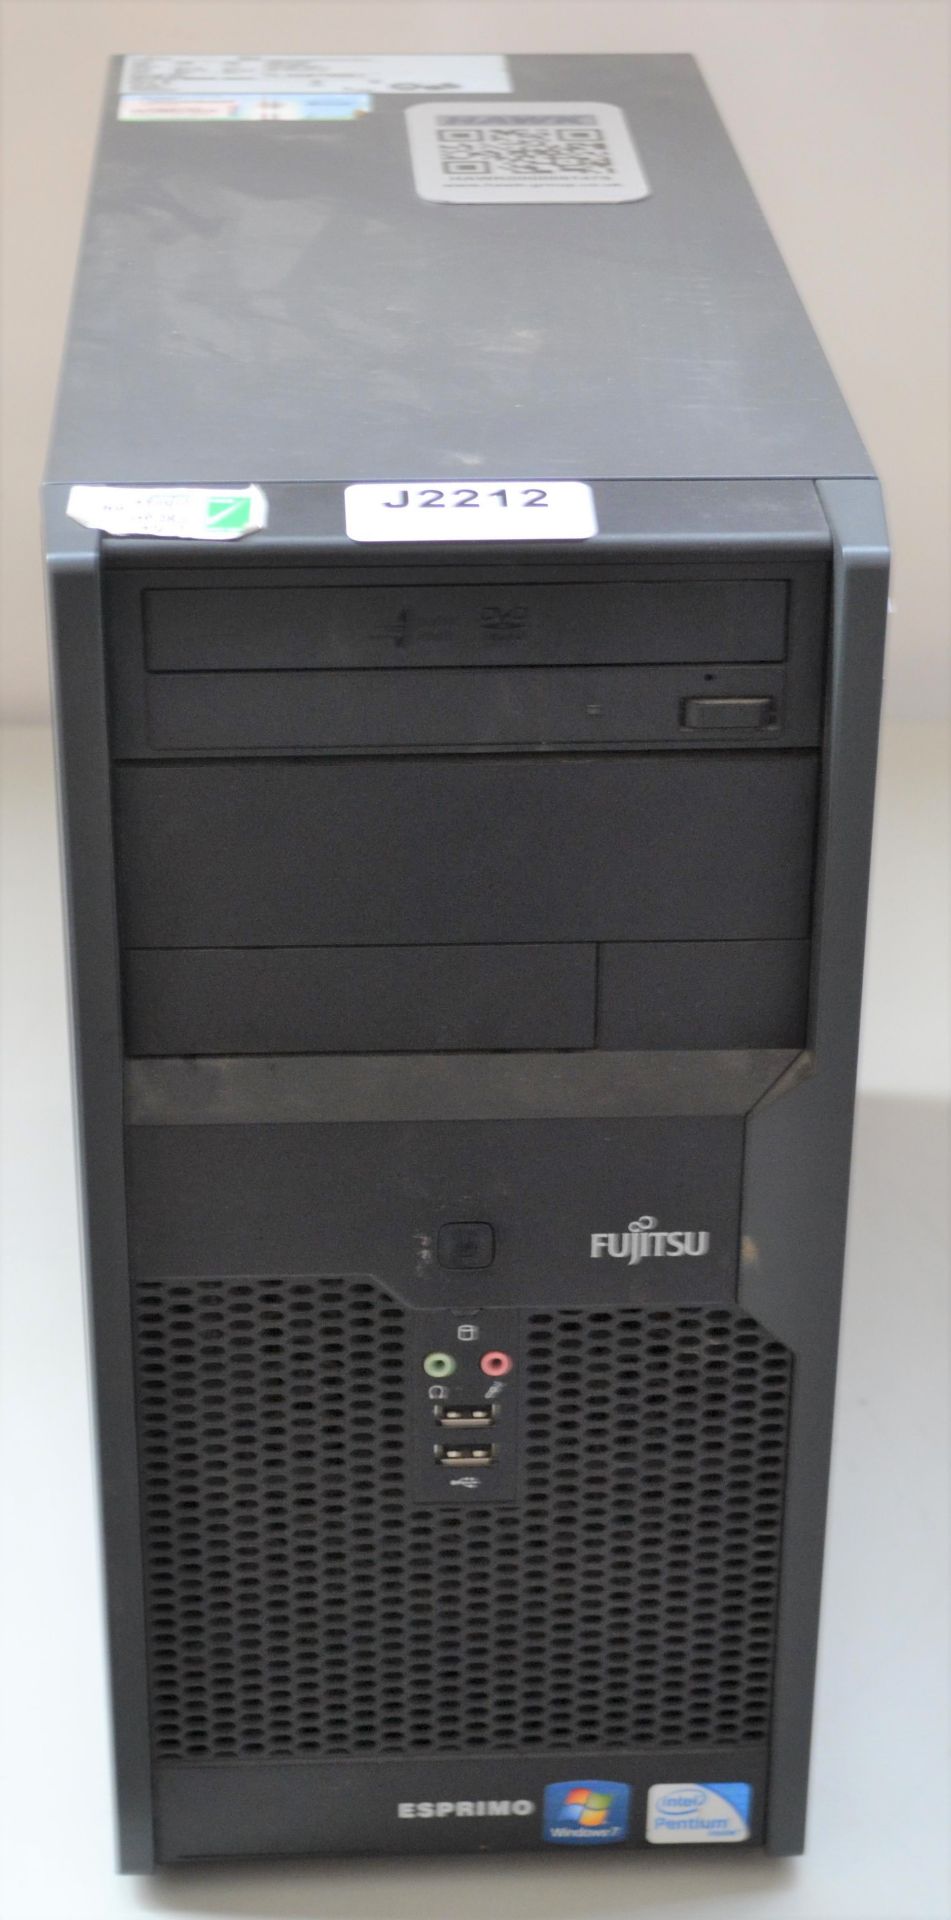 1 x Fujitsu Esprimo P2560 Desktop Computer - Features Intel Pentium 3.20ghz Processor and 4gb DDR3